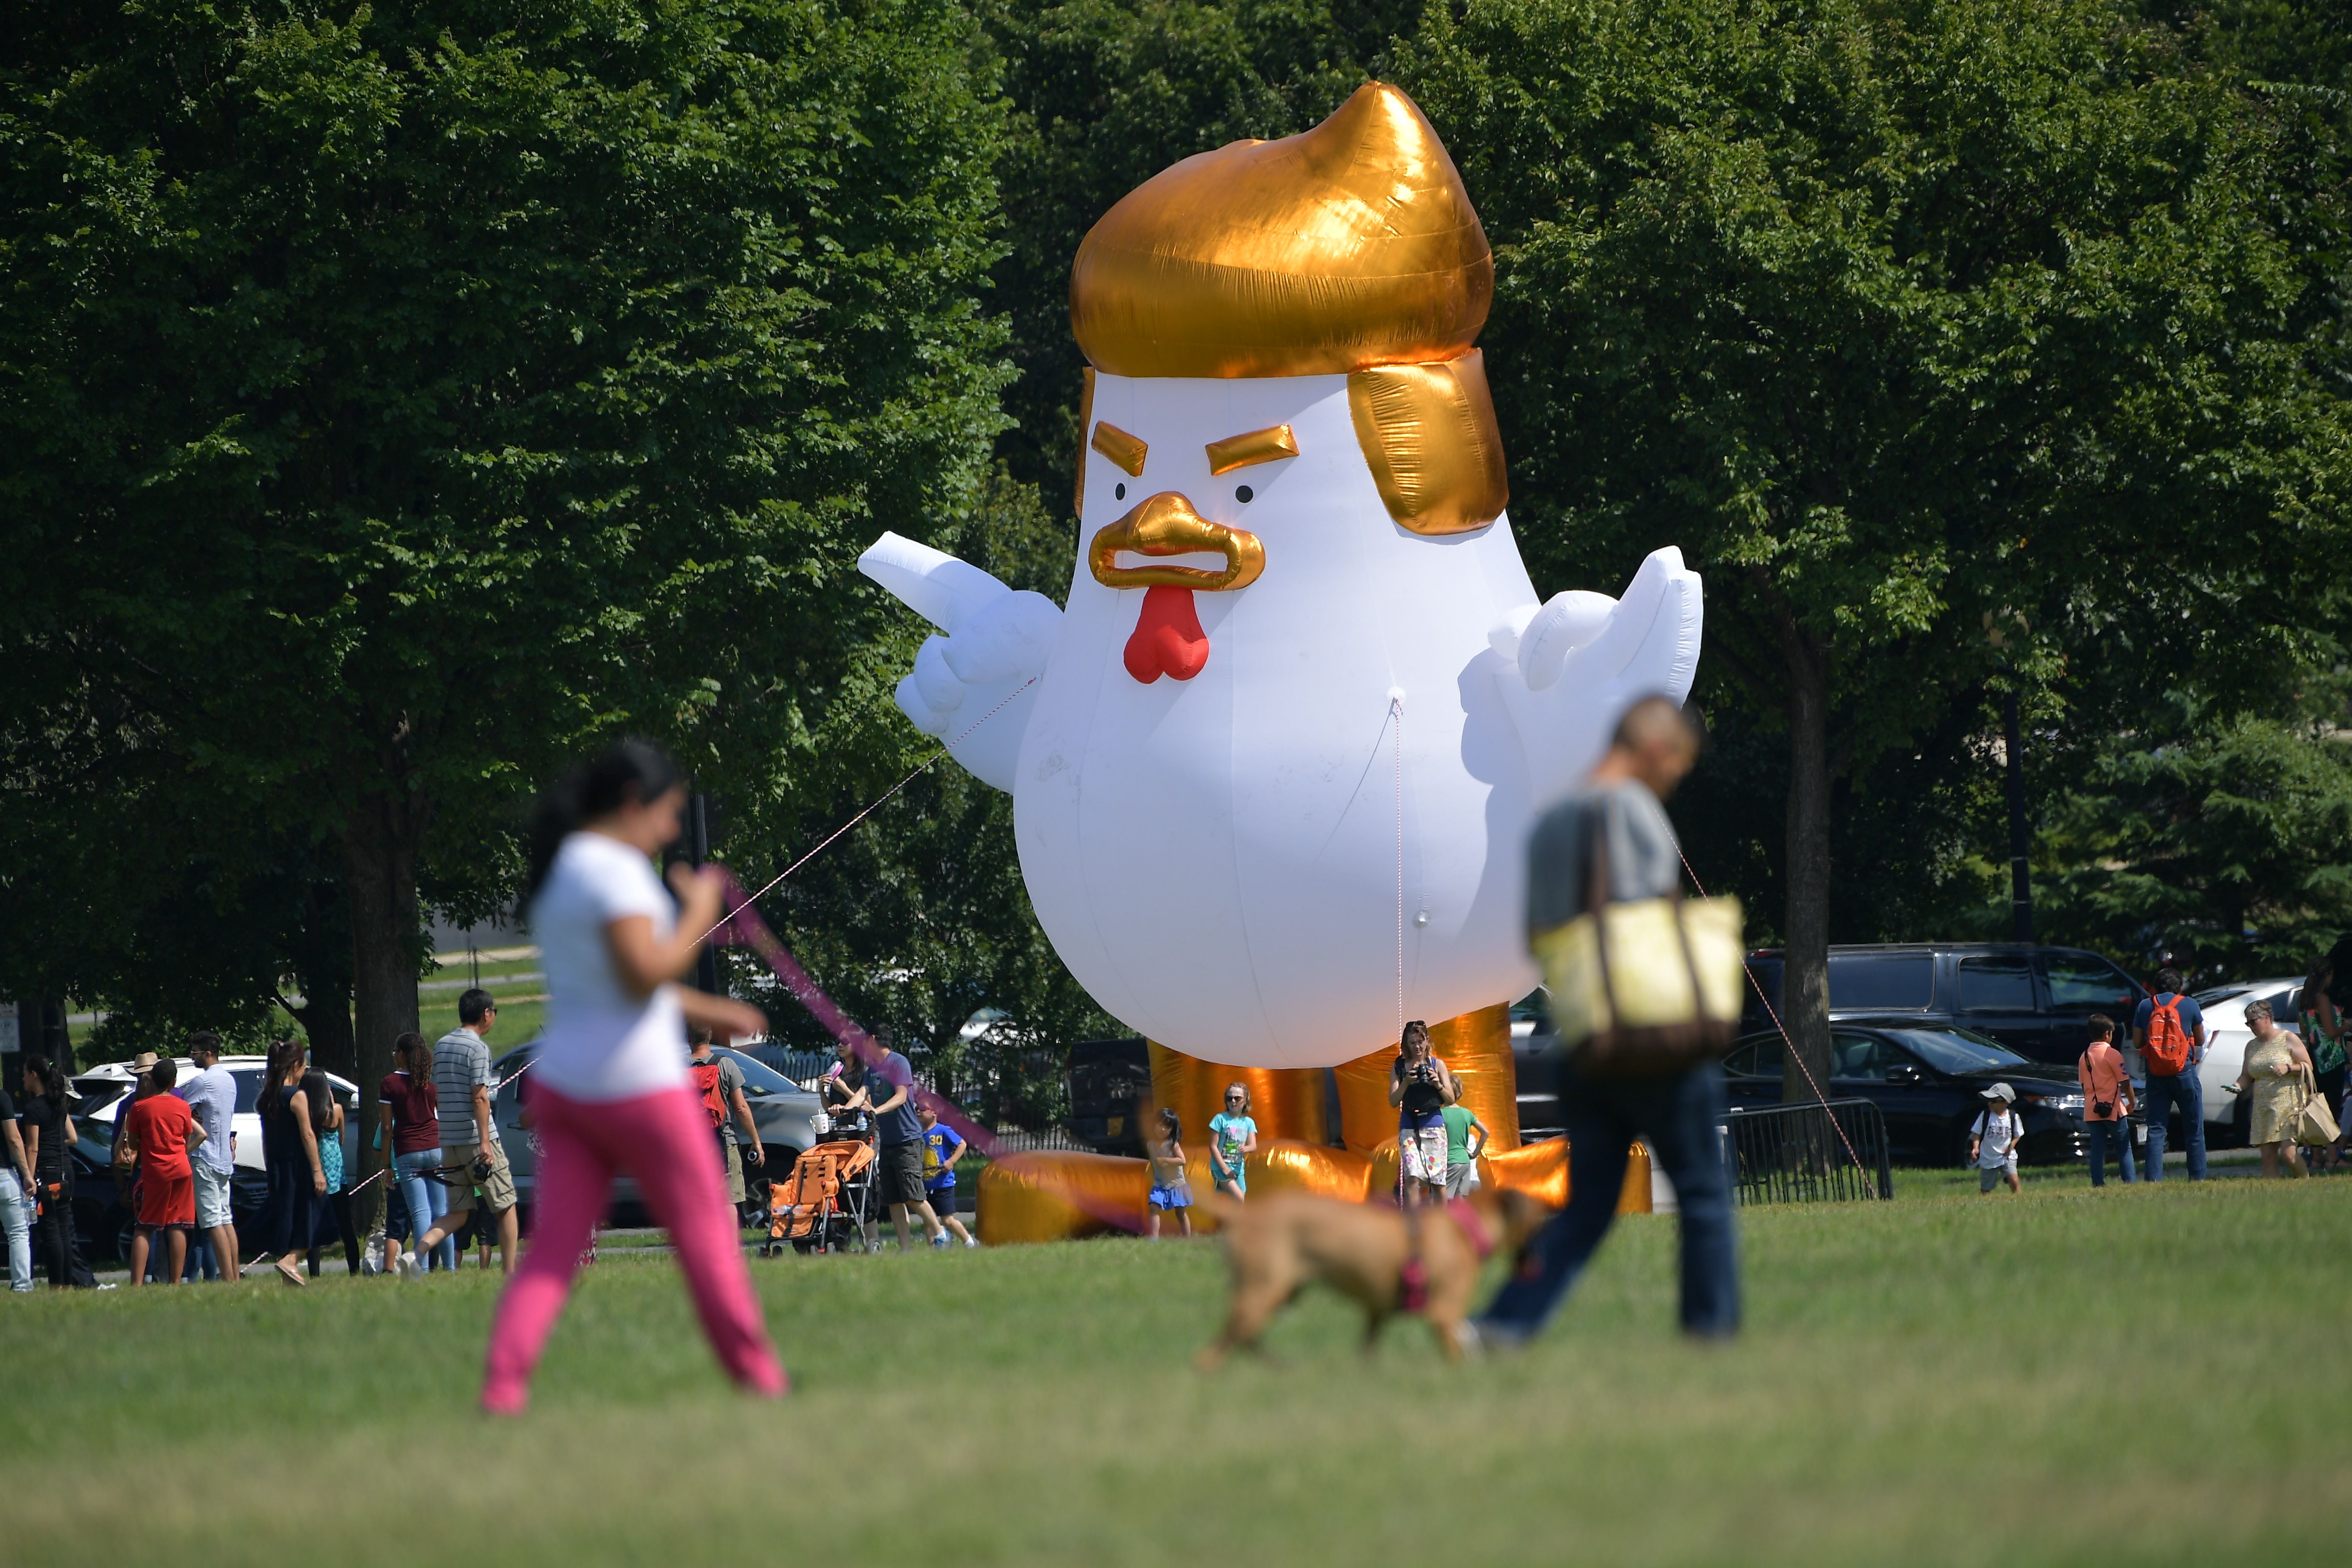 Giant chicken balloon with Trump-like hair seen near White House